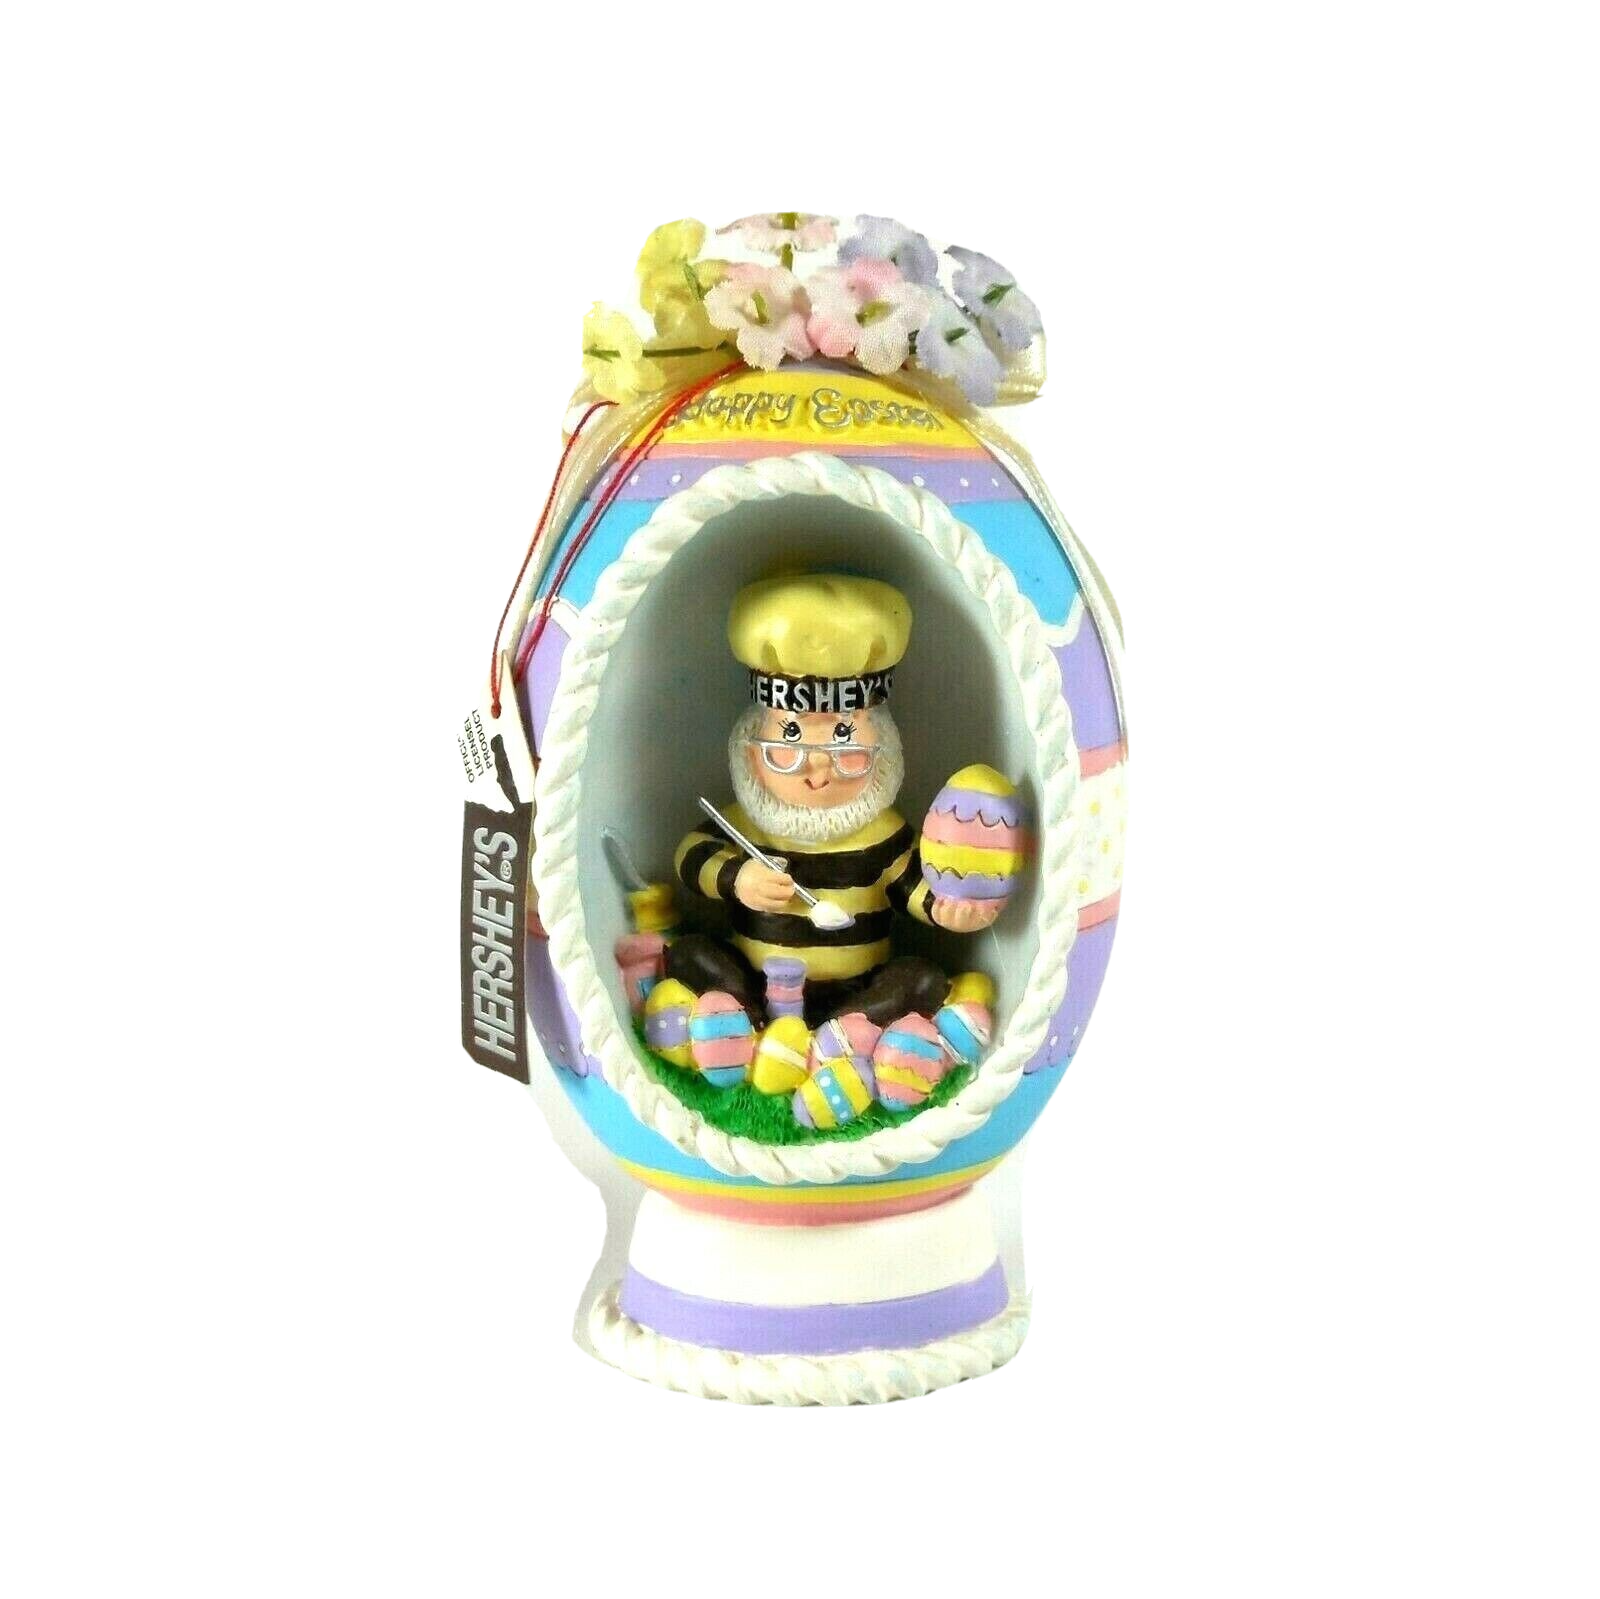 Kurt S. Adler Happy Easter Coloring Eggs Figurine 2002 Hershey's Collectible - $14.00